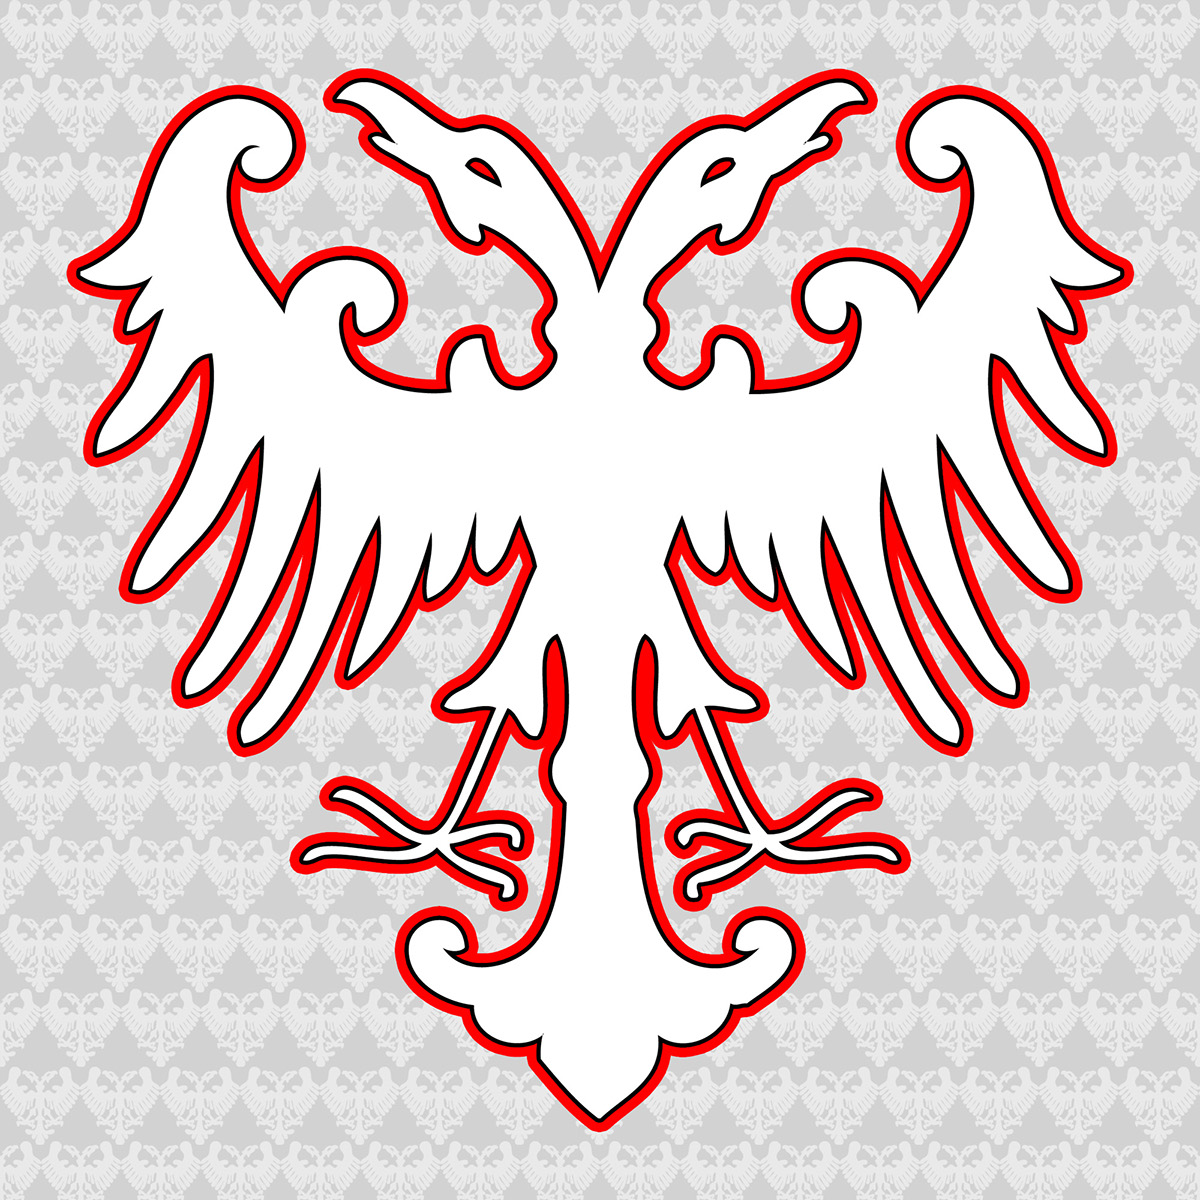 Serbia srbija kosovo metohija Republika Srpska nemanjici heraldy medieval eagle